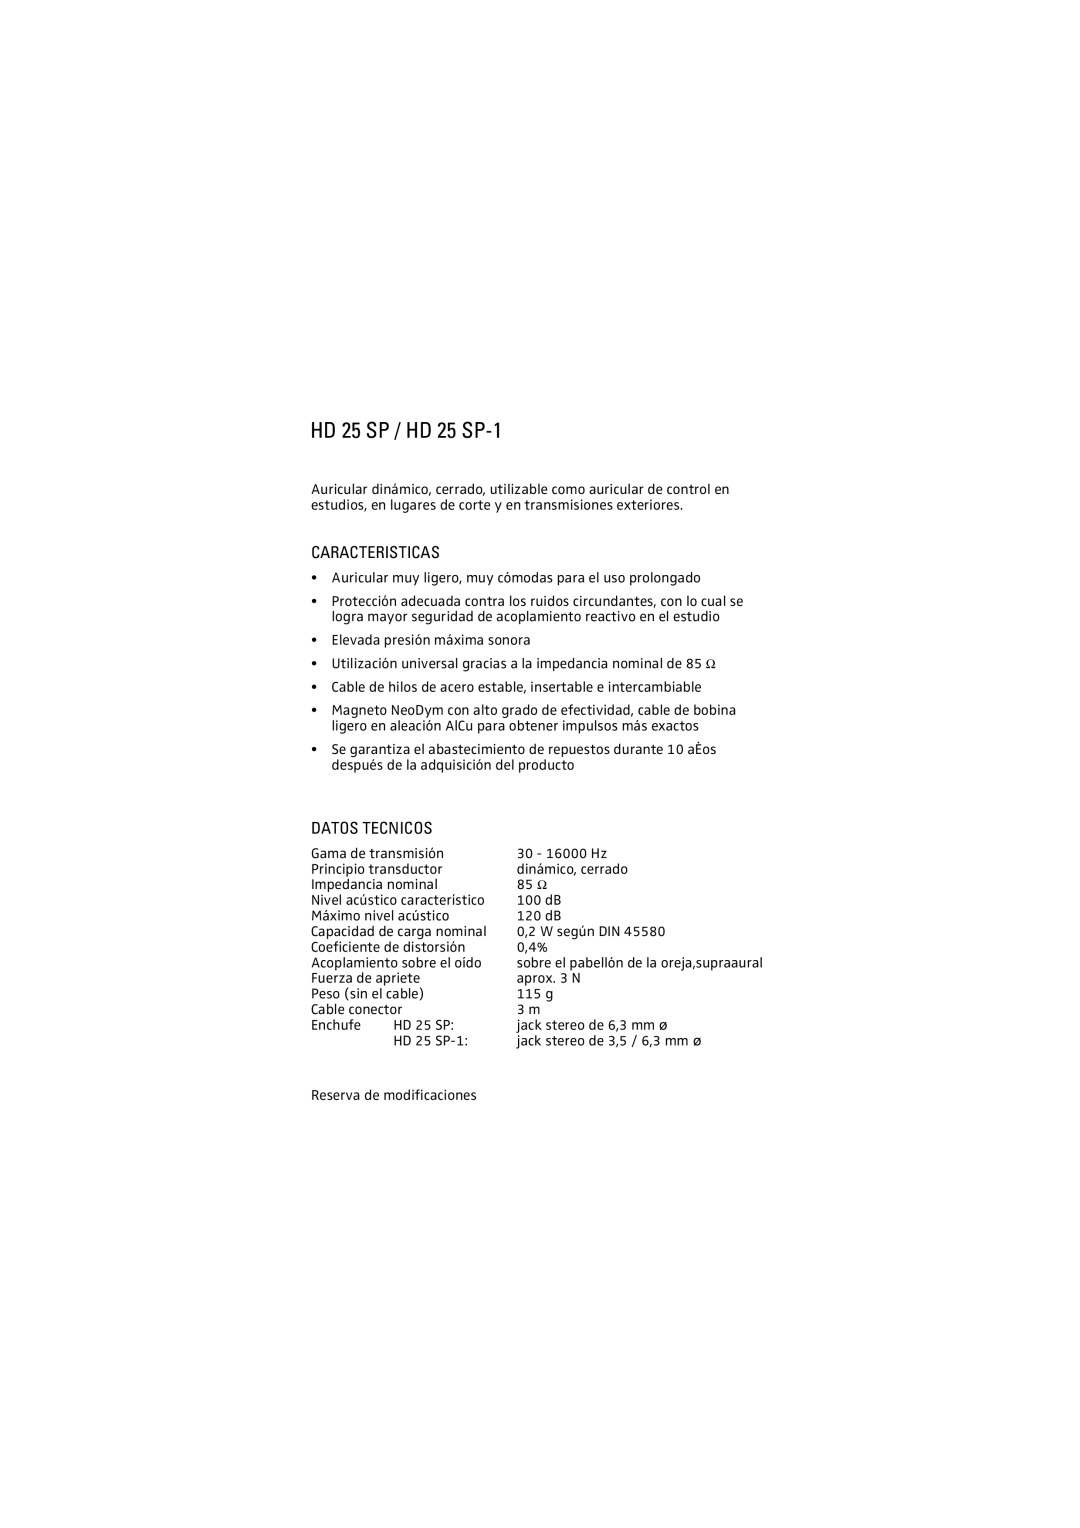 Sennheiser manual Caracteristicas, Datos Tecnicos, HD 25 SP / HD 25 SP-1 